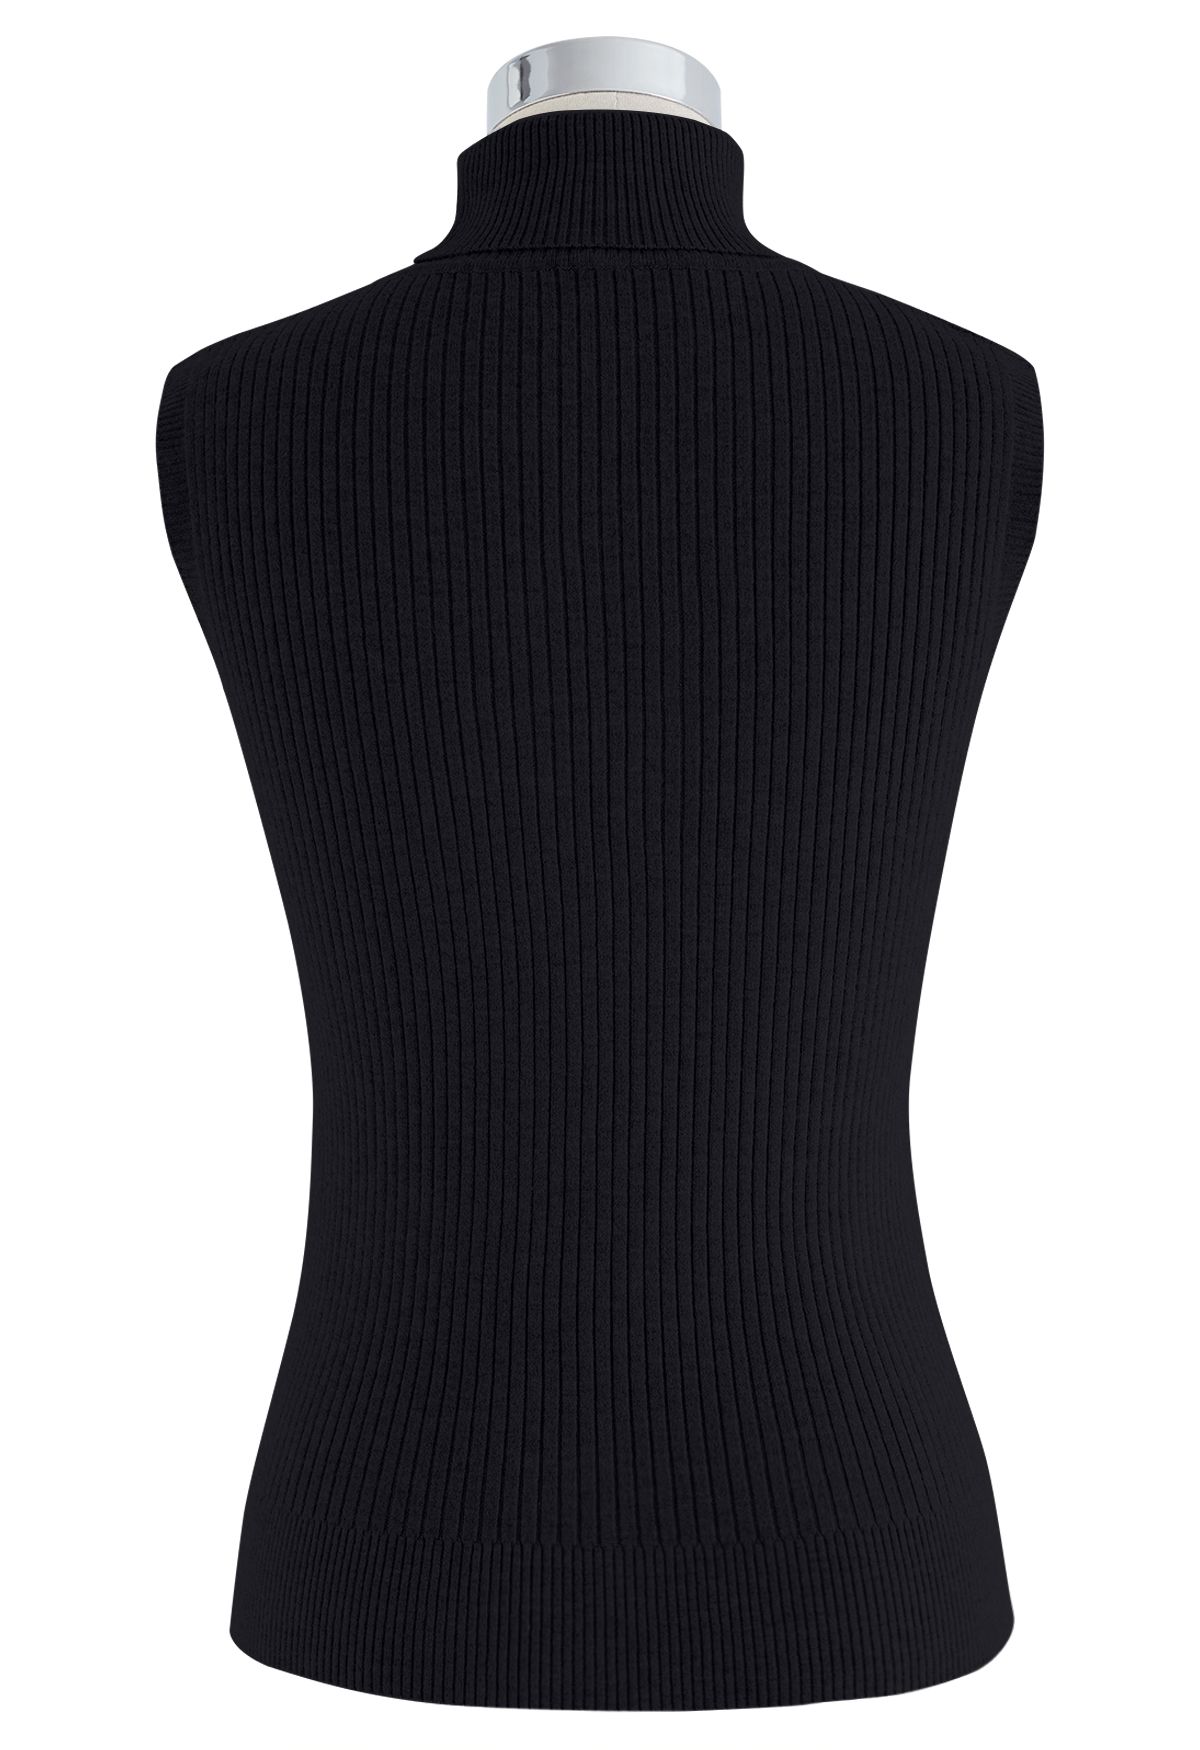 Turtleneck Soft Knit Sleeveless Top in Black